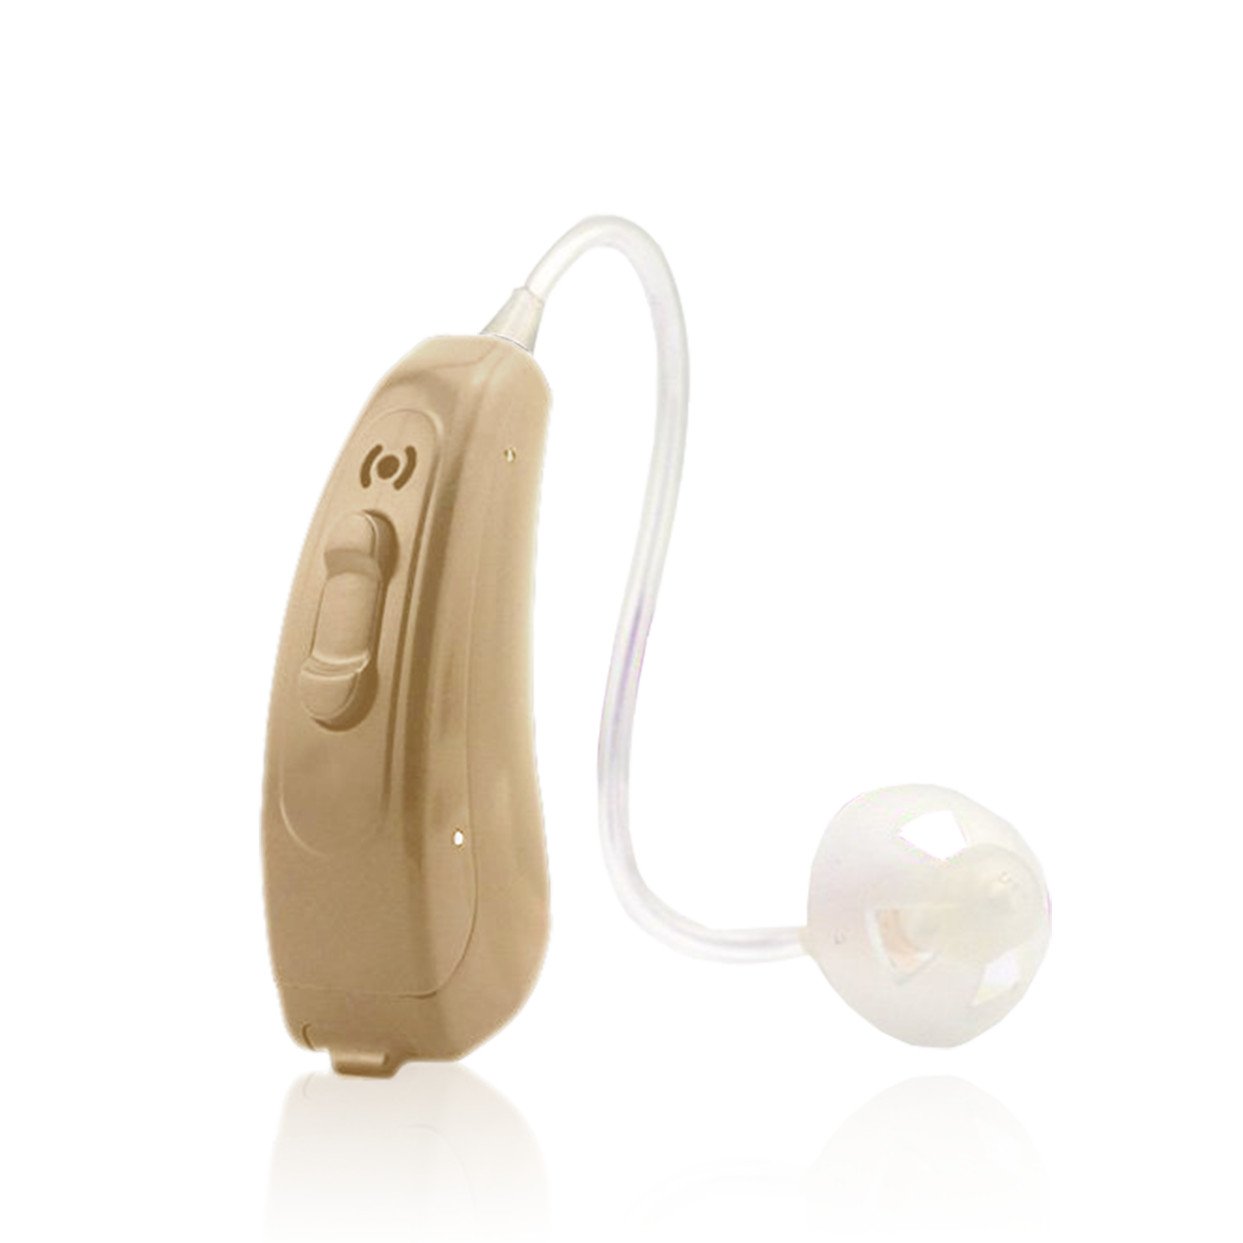 Audionexx 202 OTC hearing aid